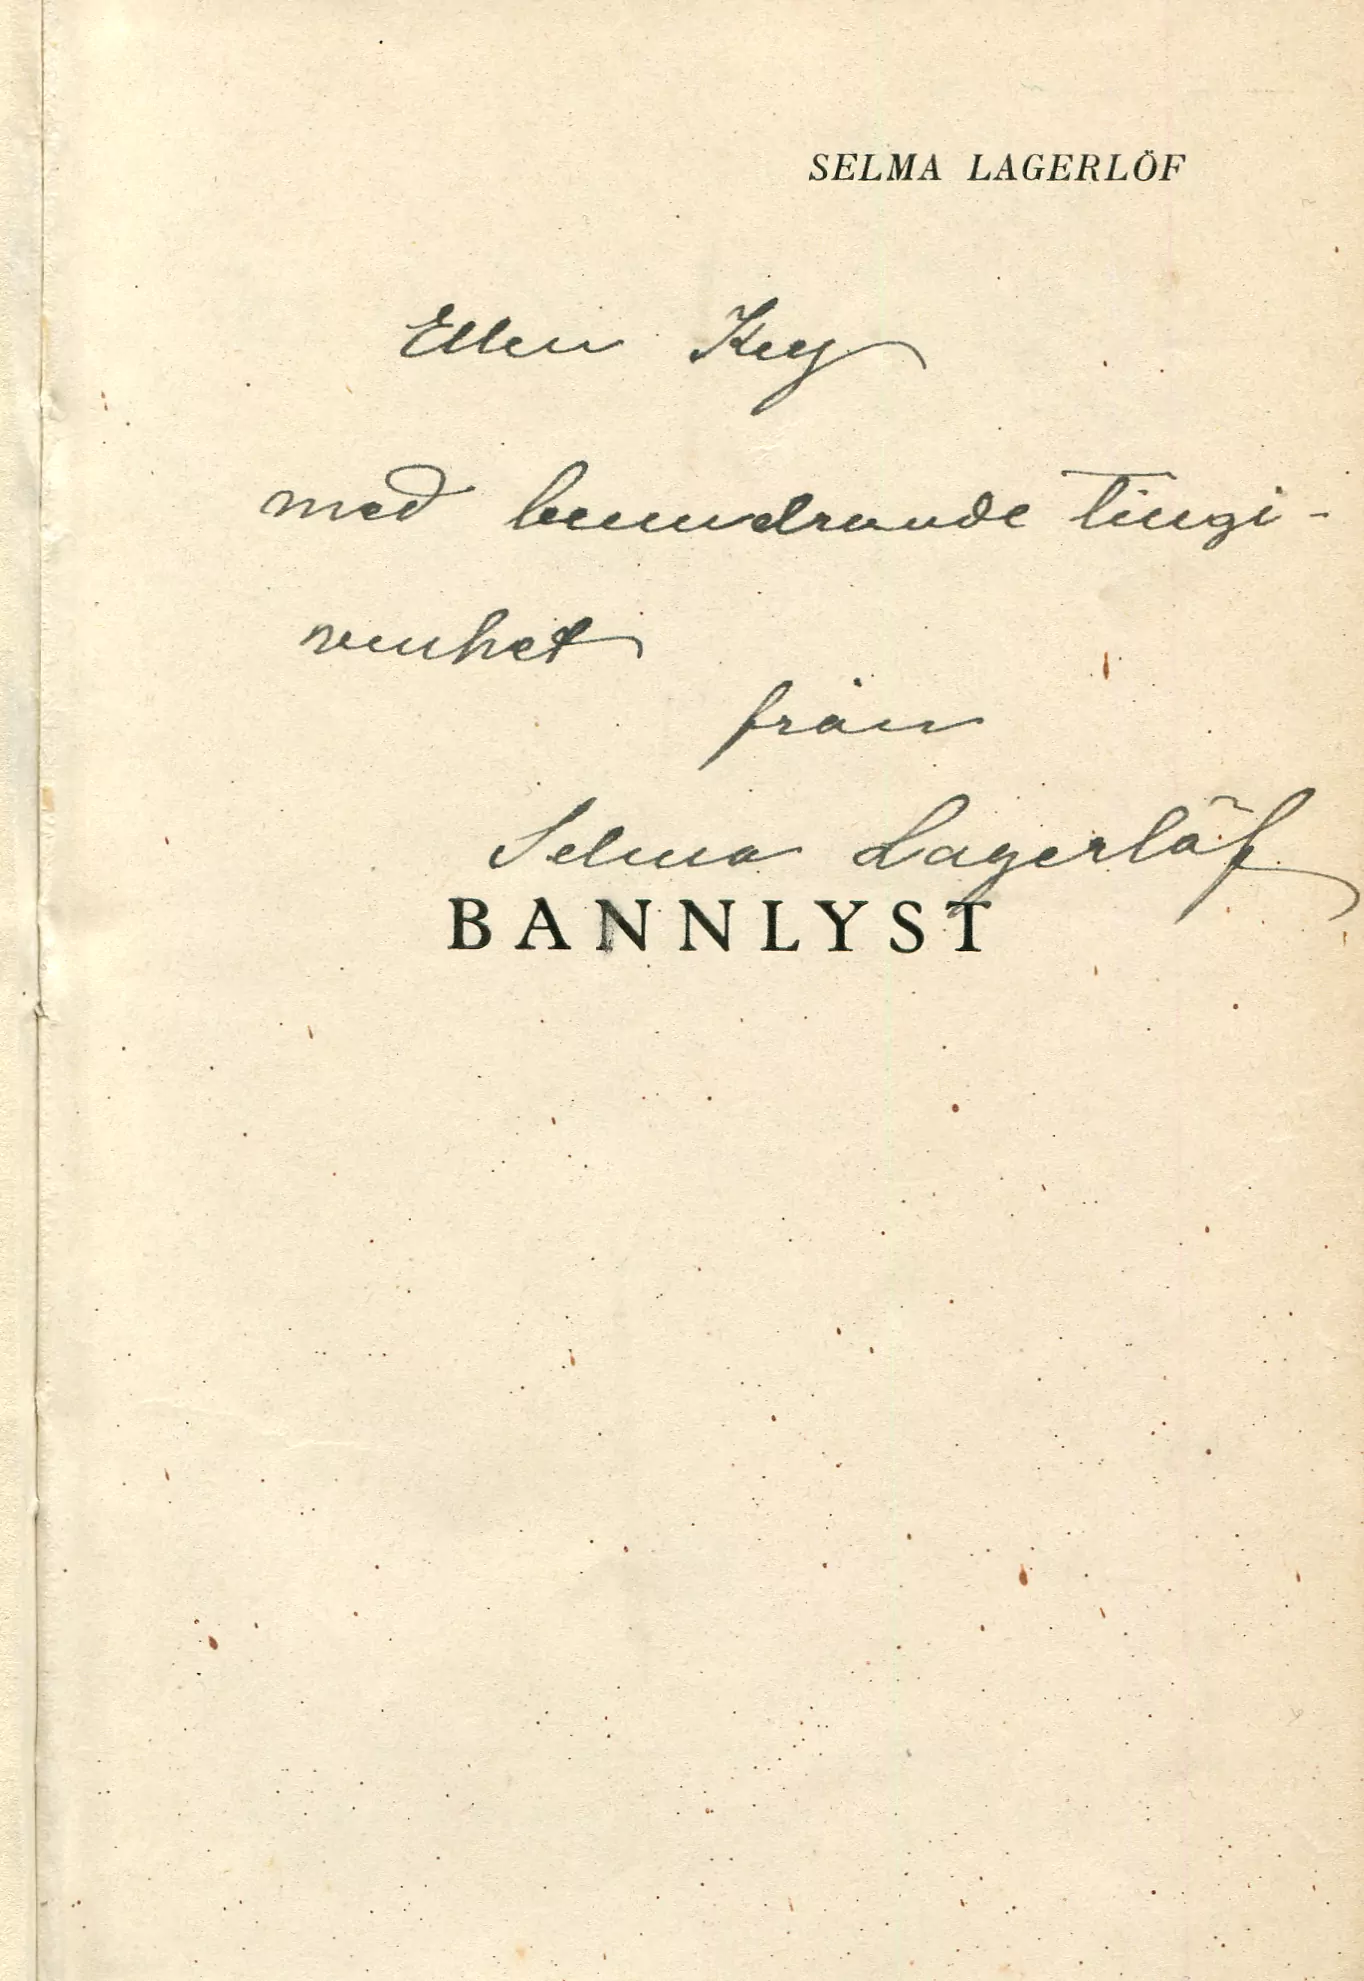 Bannlyst  2. uppl., Stockholm 1918